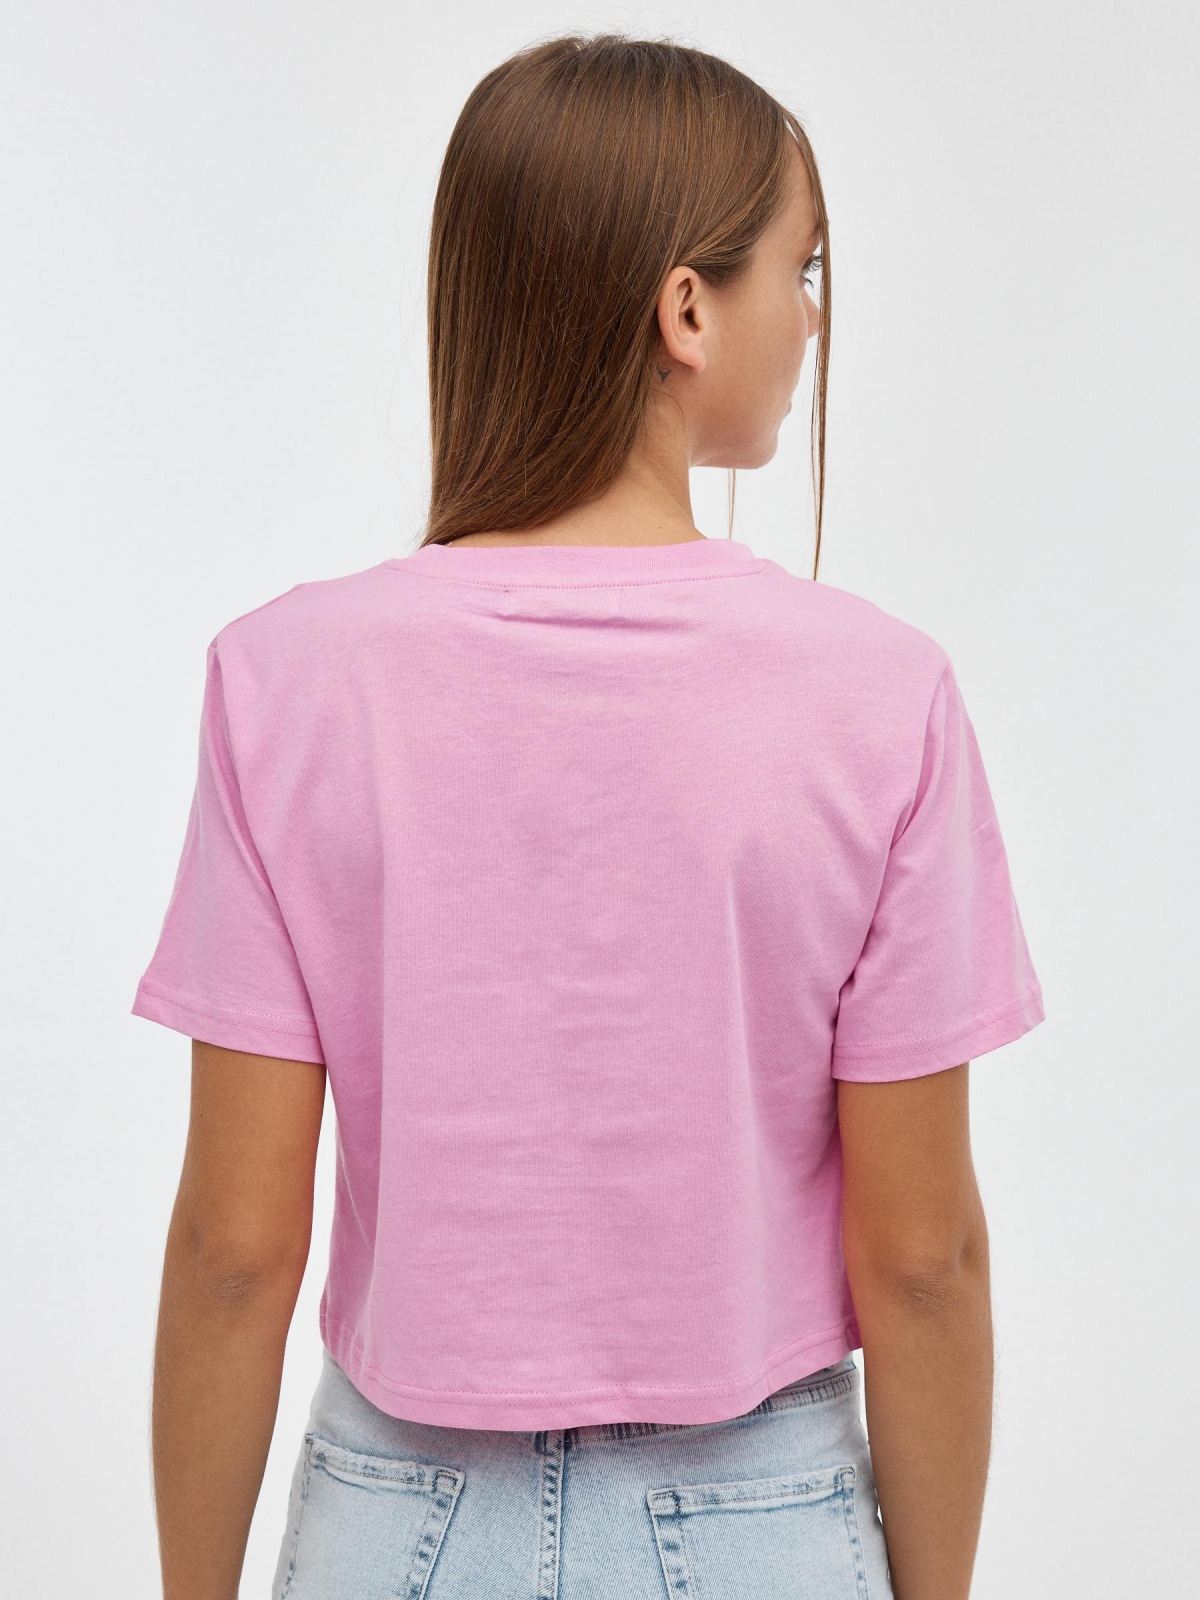 Camiseta crop rosa gráfico rosa chicle vista media trasera